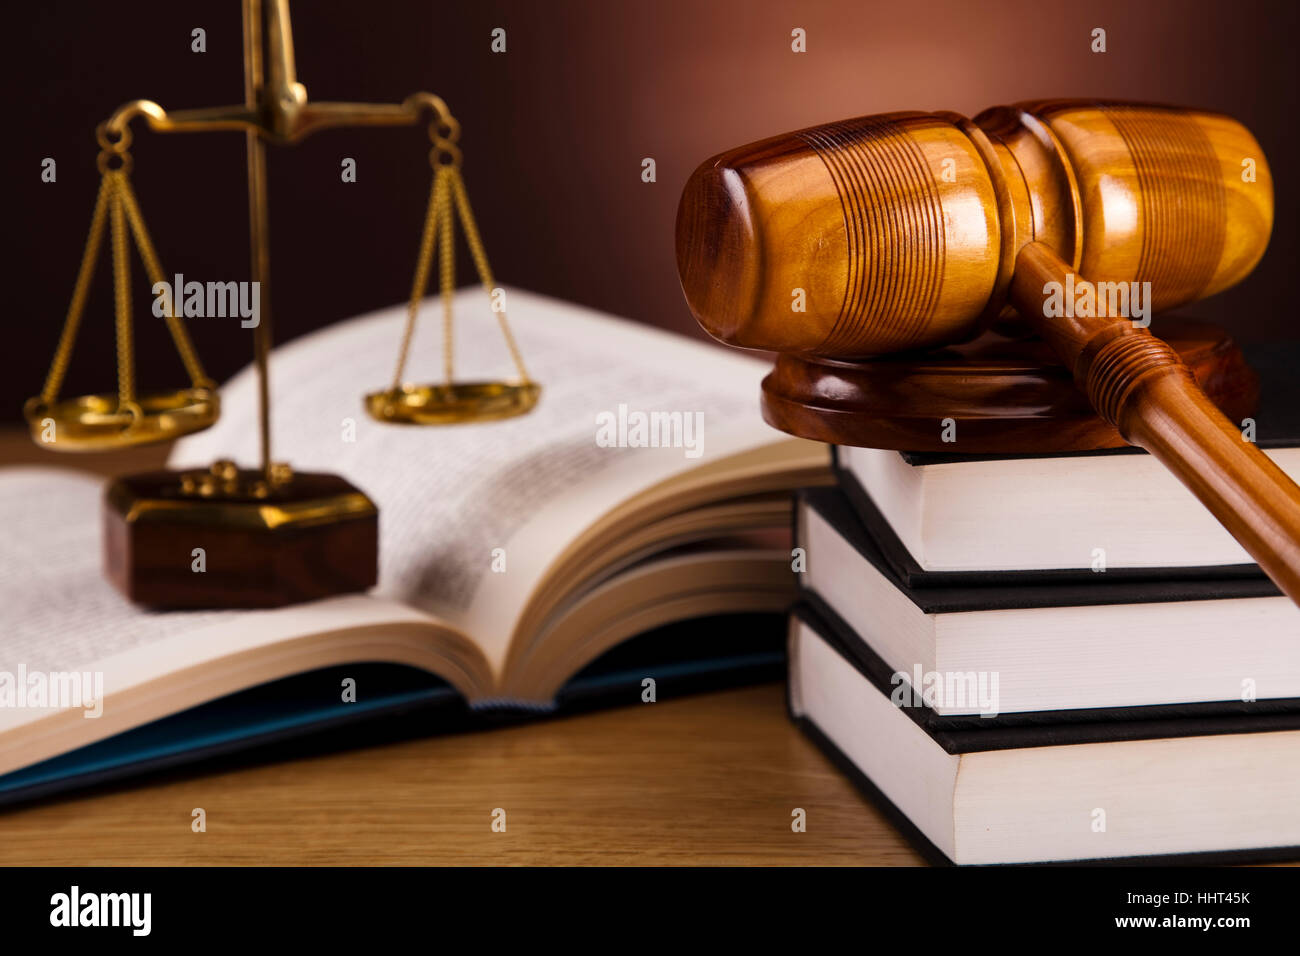 Free Law Logo Generator - Legal, Attorney, Judge Logos